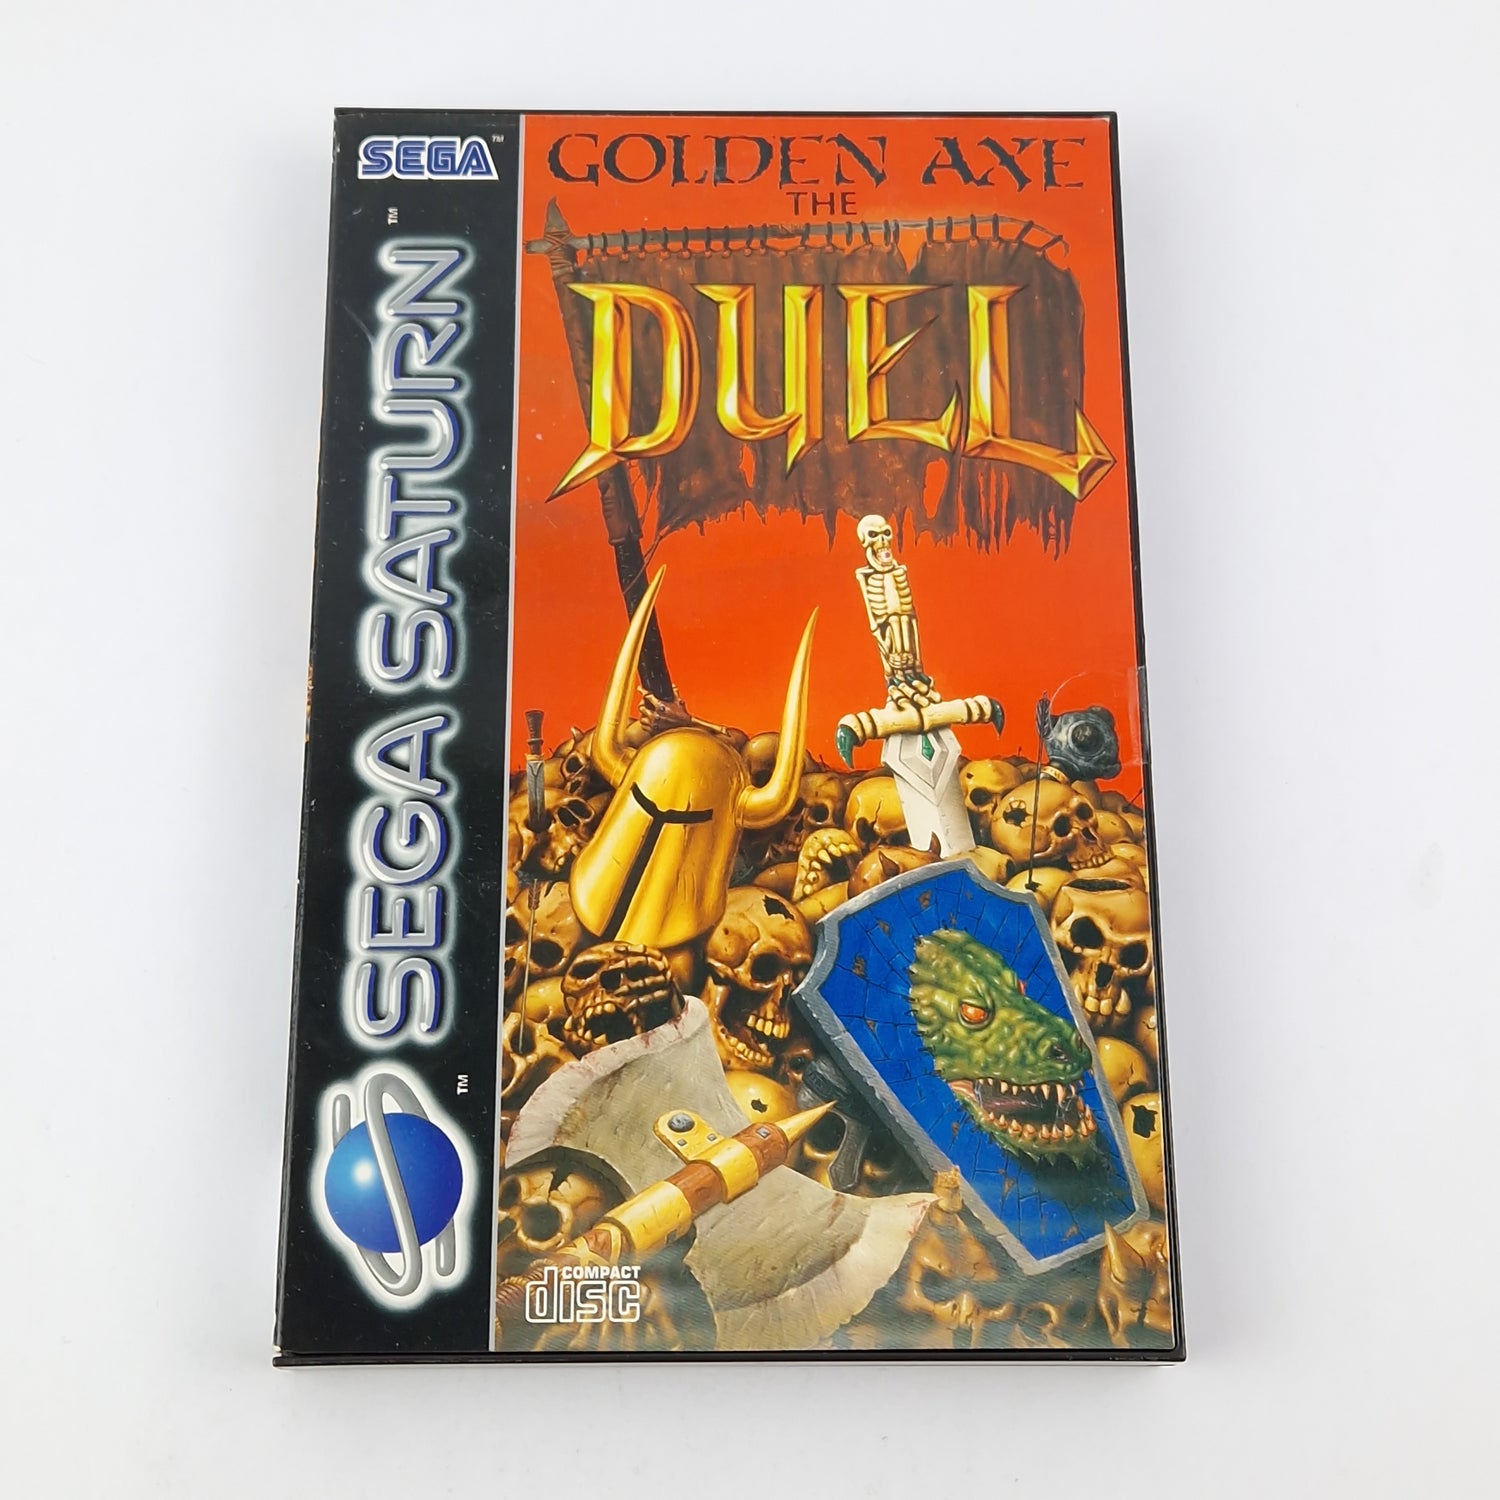 Sega Saturn Spiel : Golden Axe The Duel - CD Anleitung OVP cib | PAL Disk Game